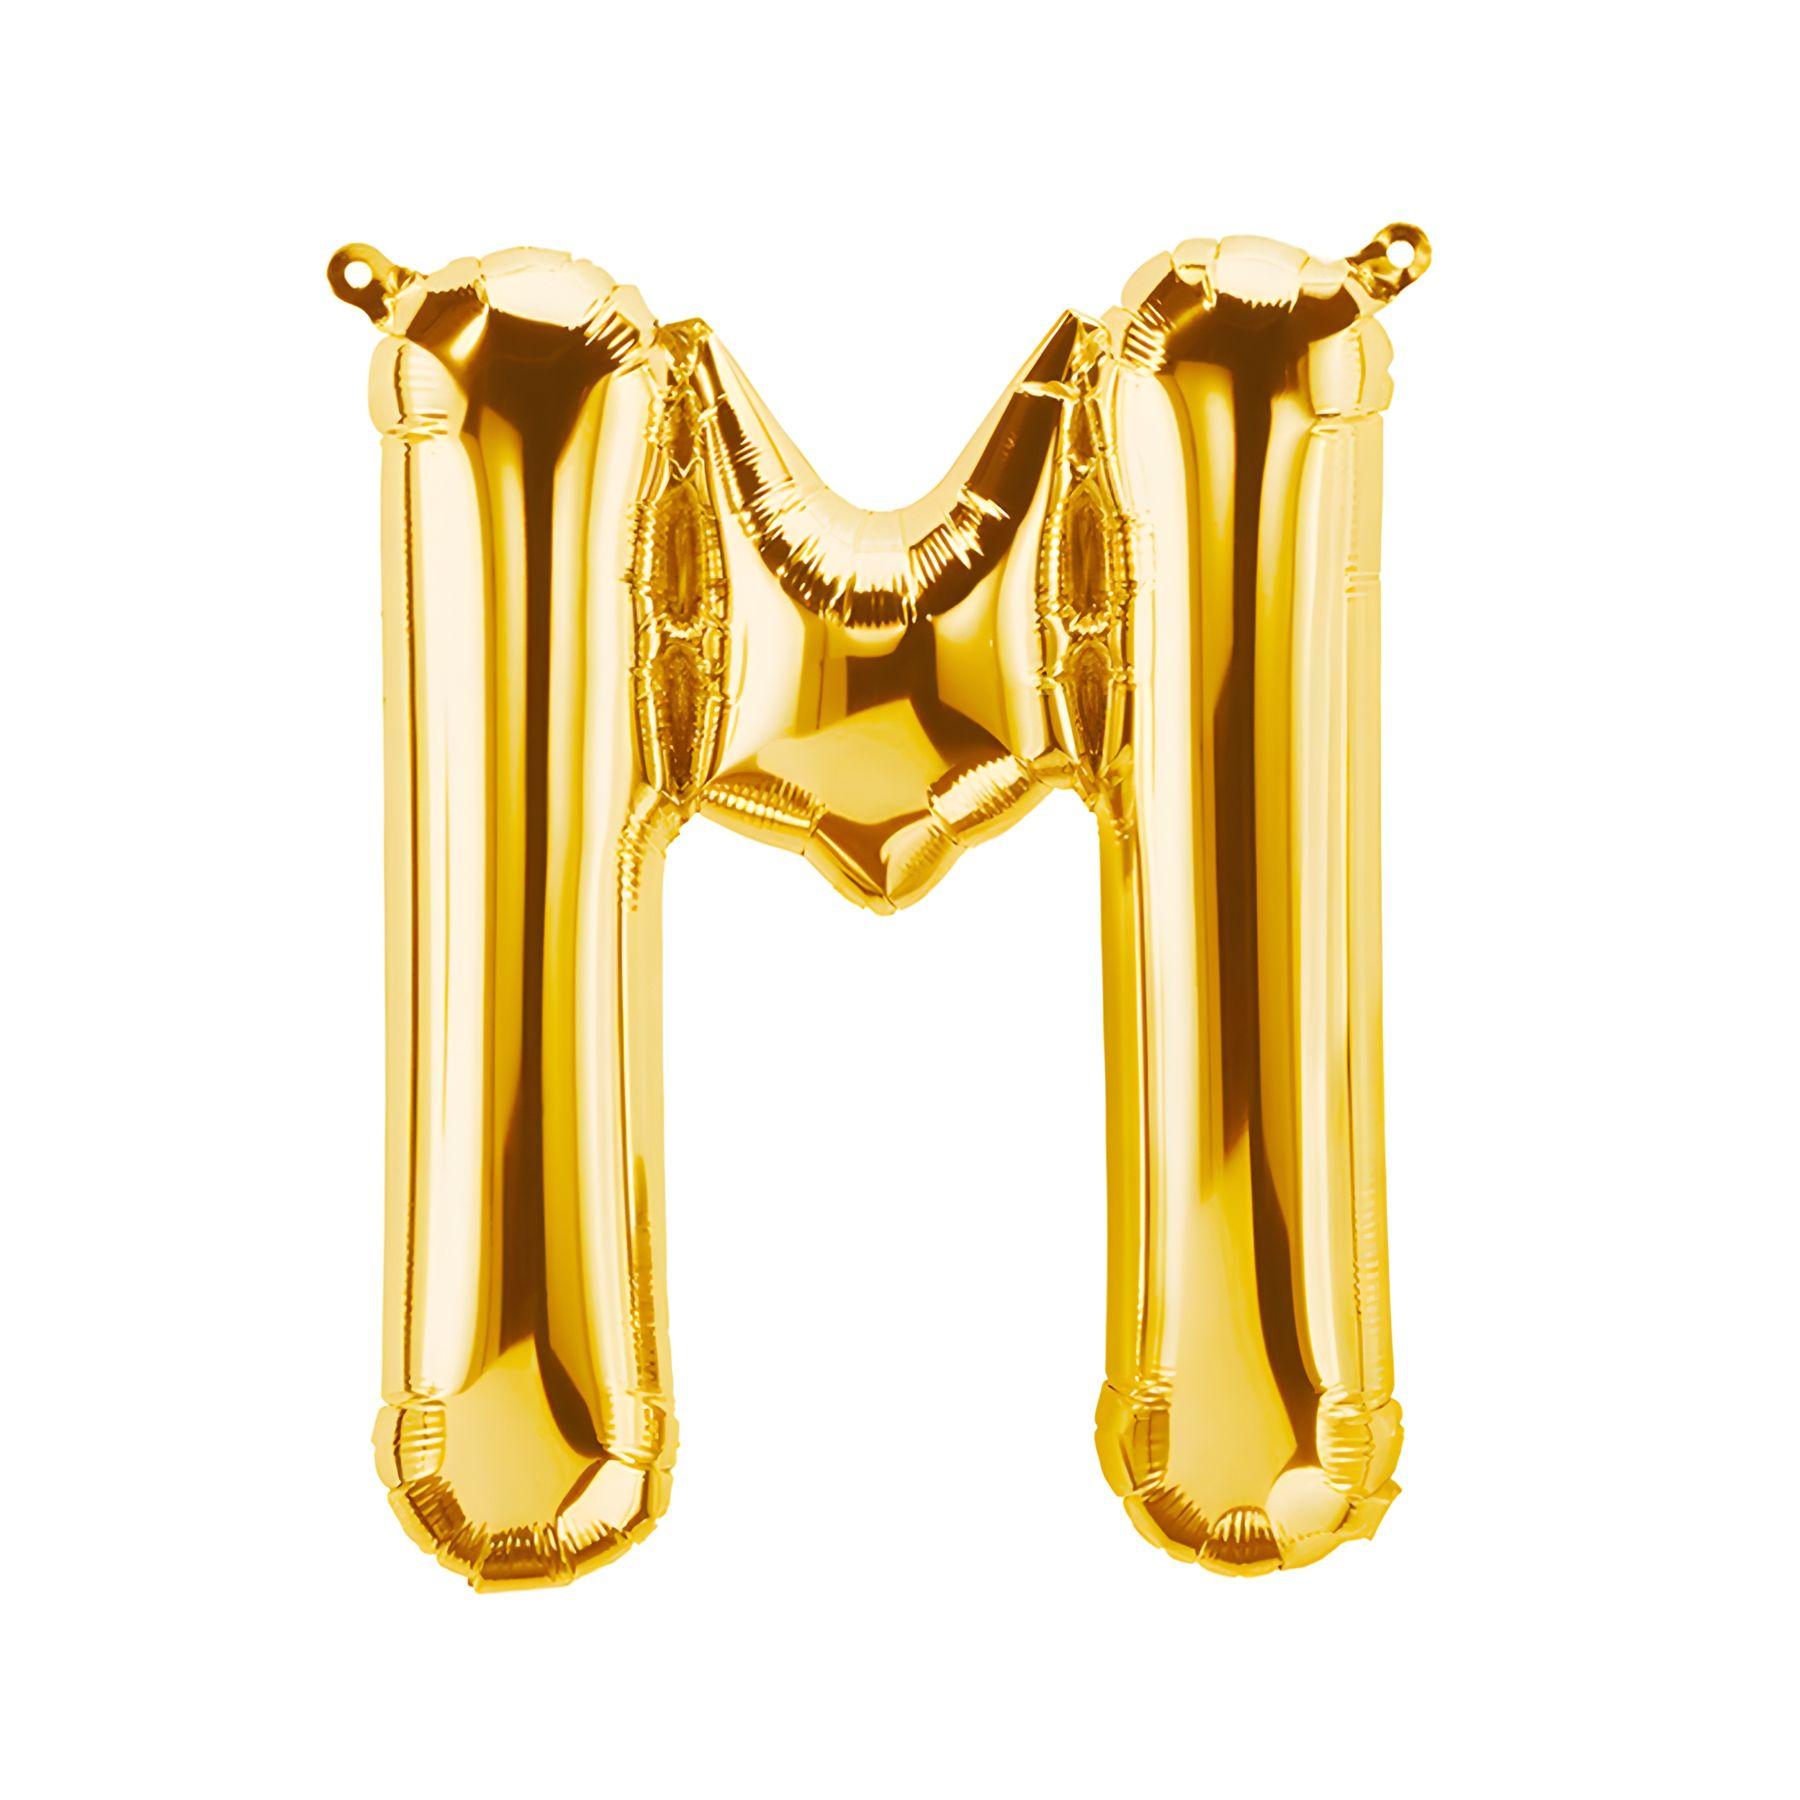 Folienballon Buchstabe M, gold, ca. 80 cm, für Luftbefüllung